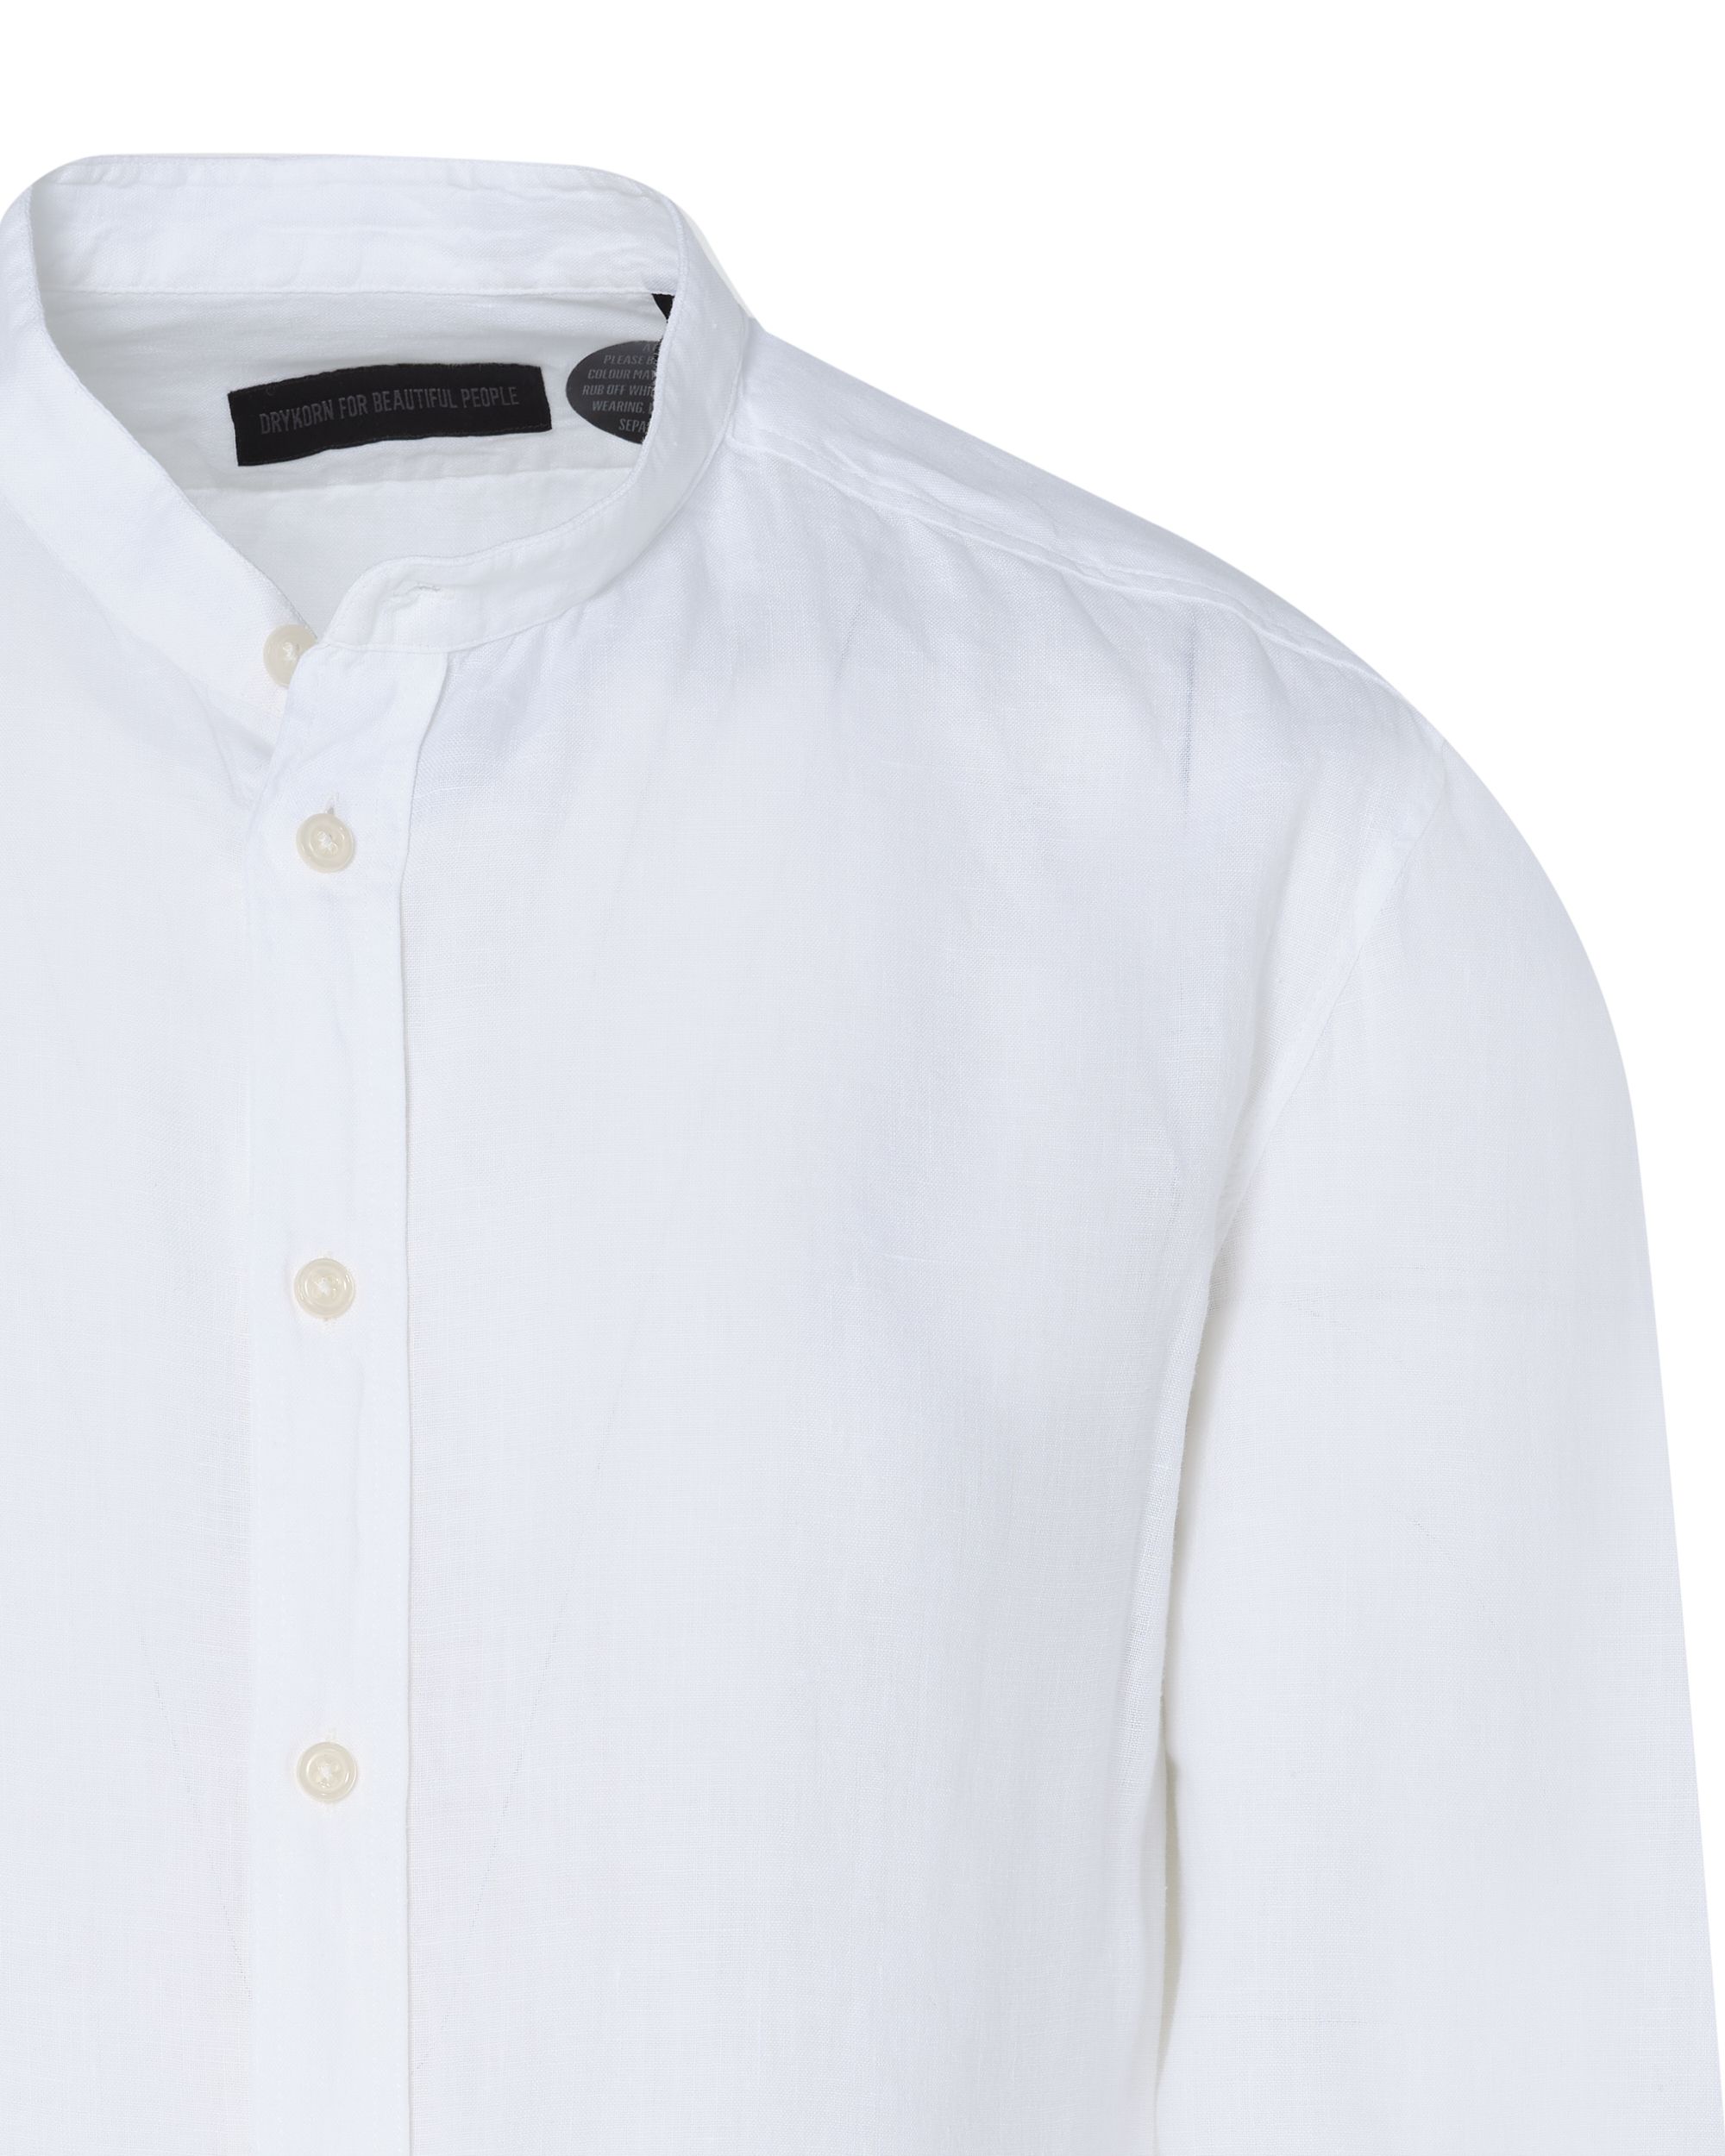 Drykorn Tarok Casual Overhemd LM Wit 085539-001-L